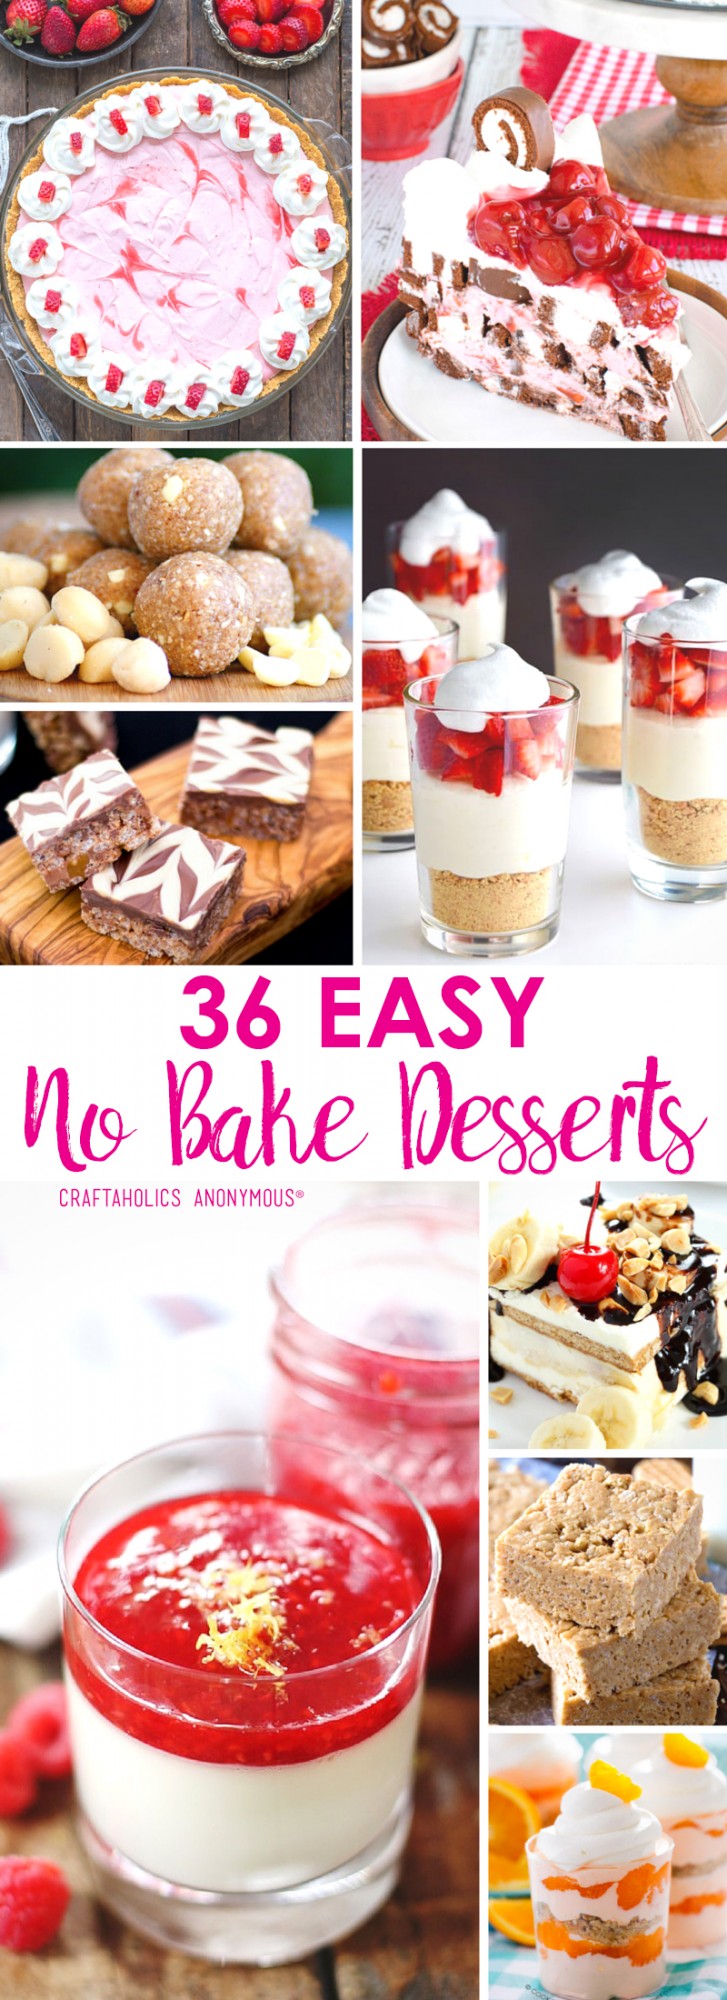 36 Easy No Bake Desserts - Craftaholics Anonymous®